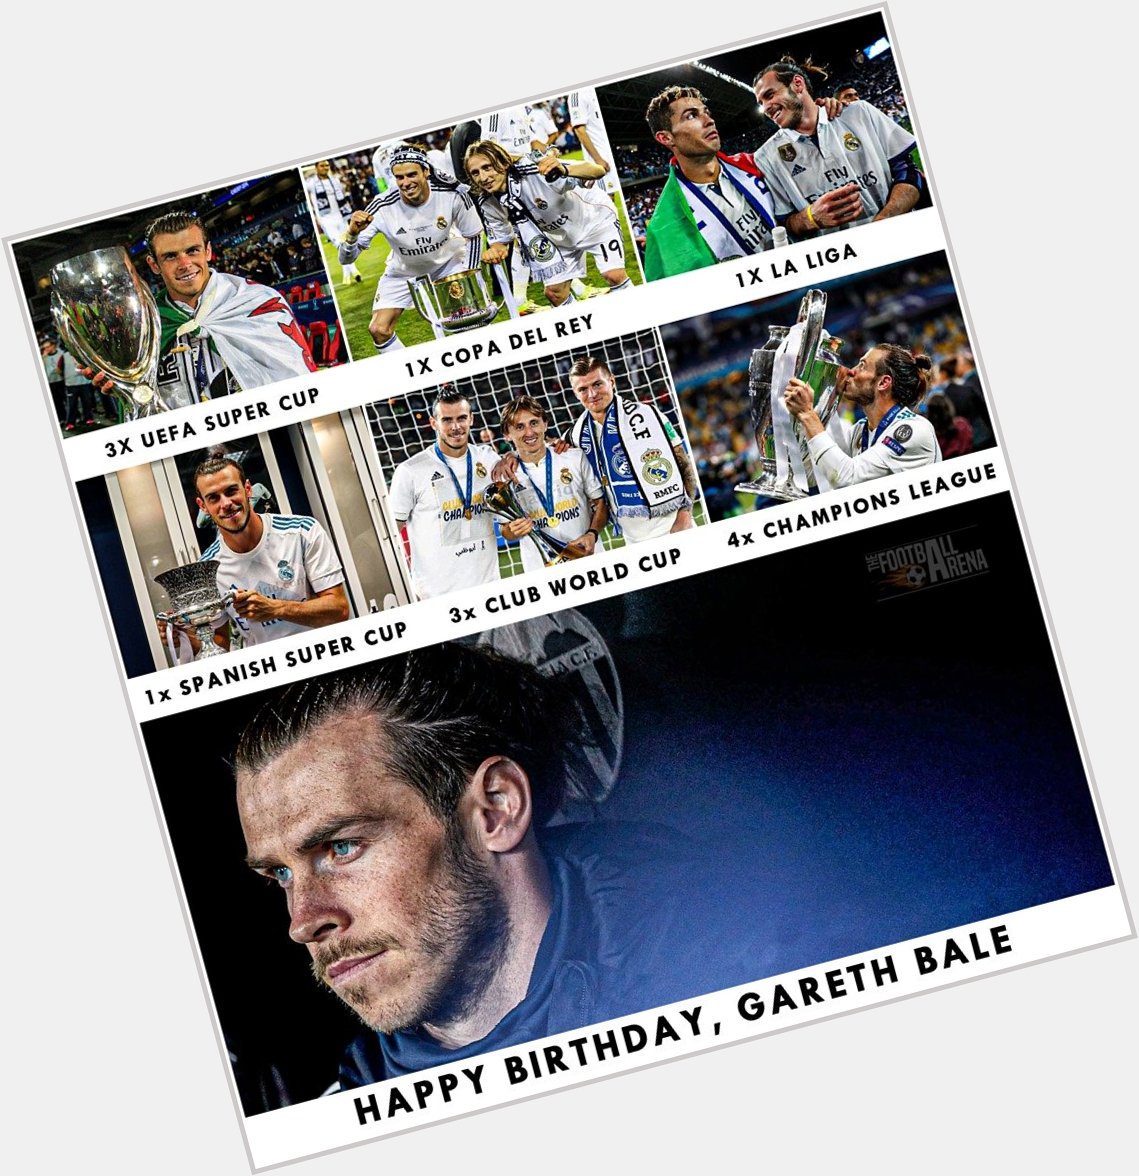 Happy Birthday, Gareth Bale    